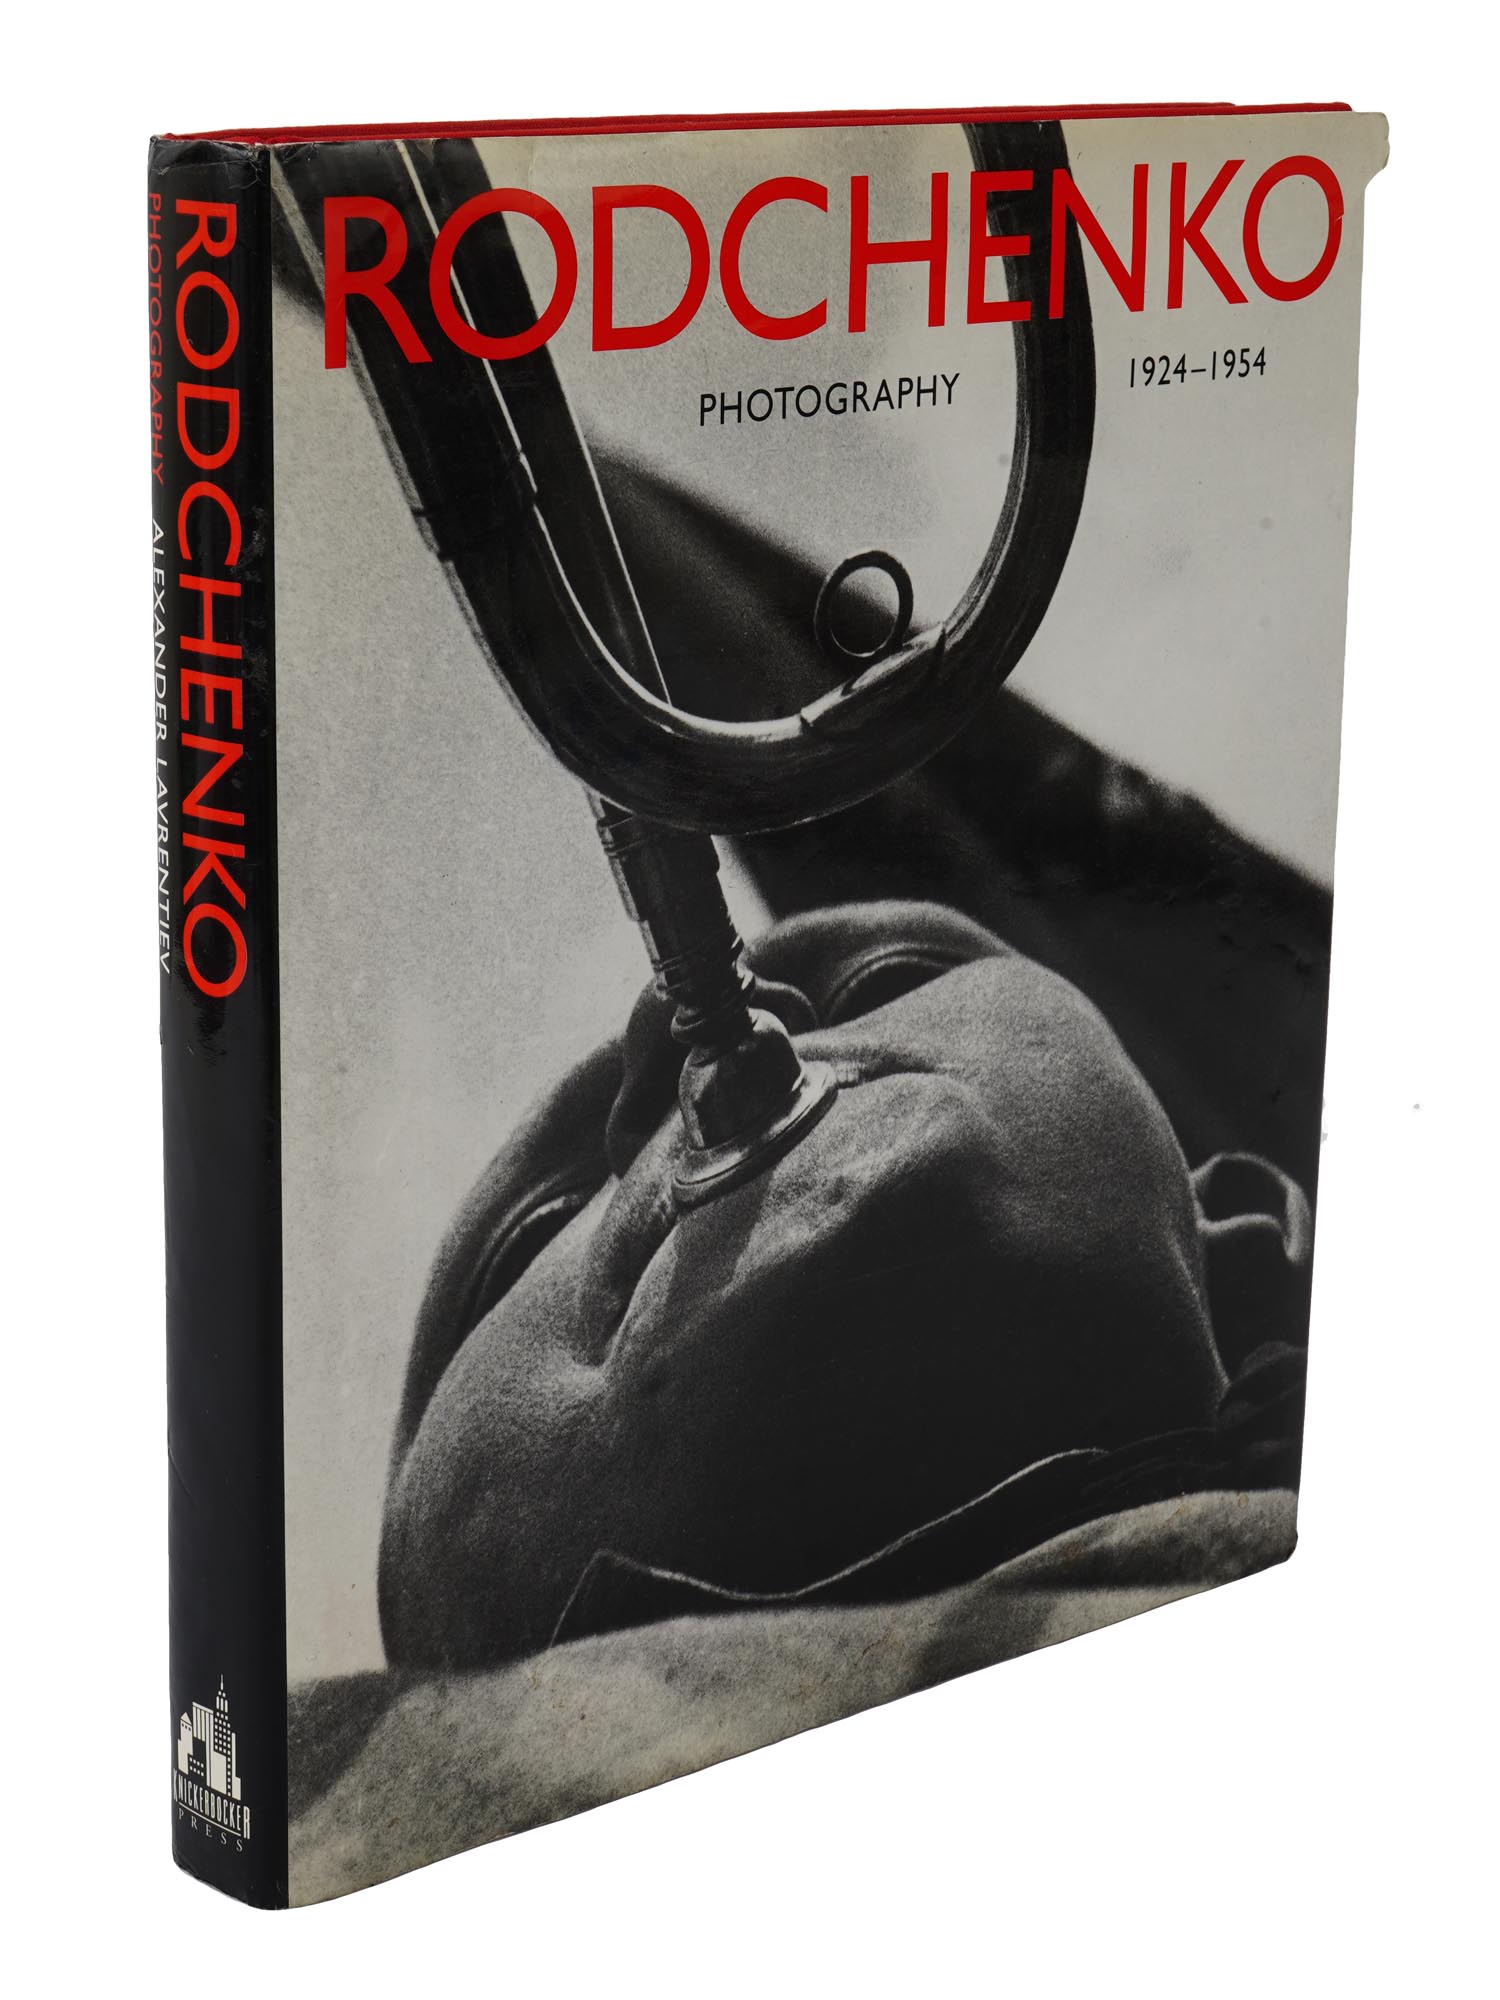 1996 ALEXANDER RODCHENKO PHOTOGRAPHY BOOK PIC-0